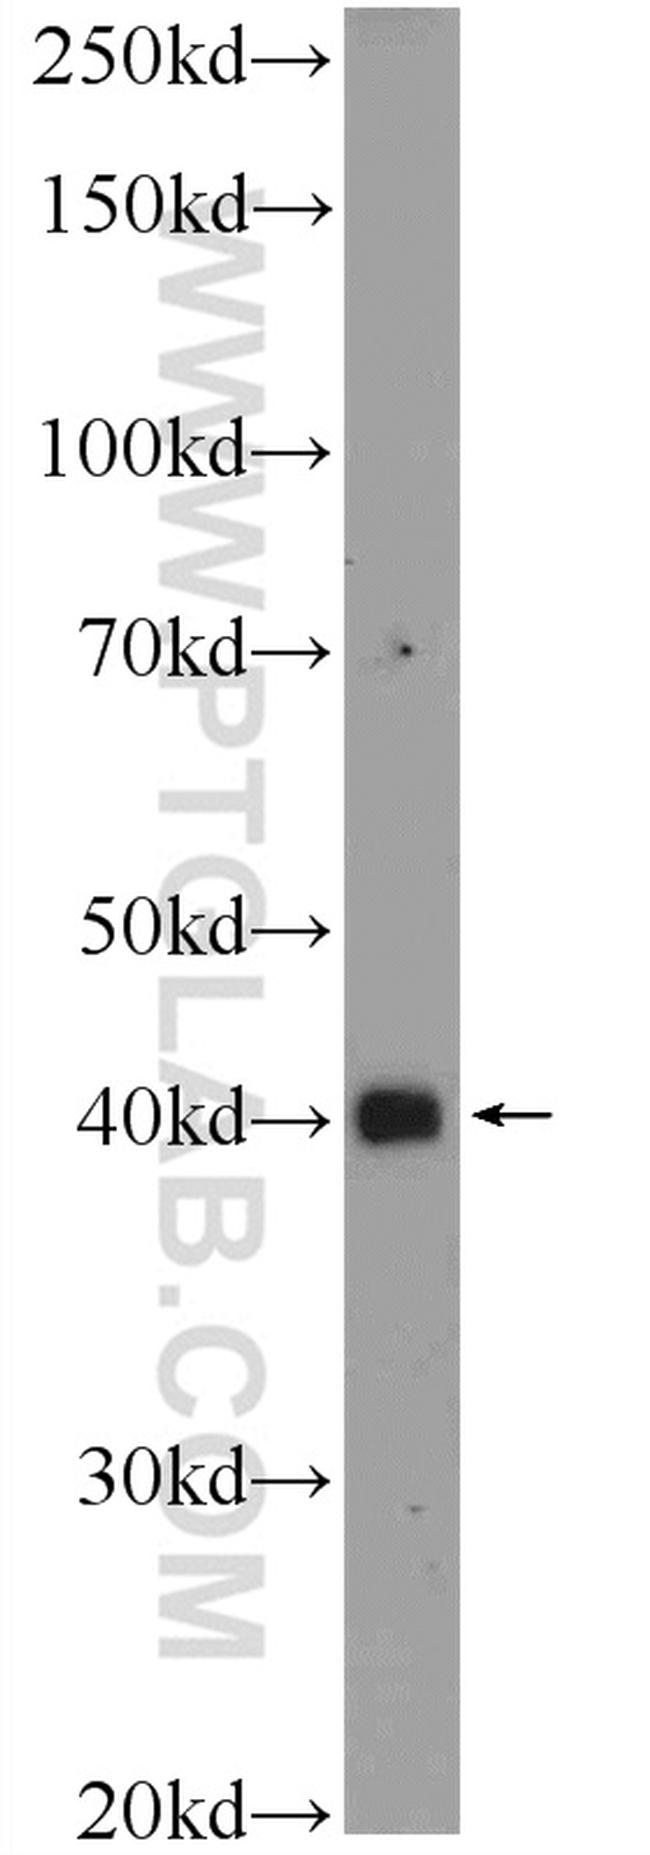 SMAD7 Antibody in Western Blot (WB)